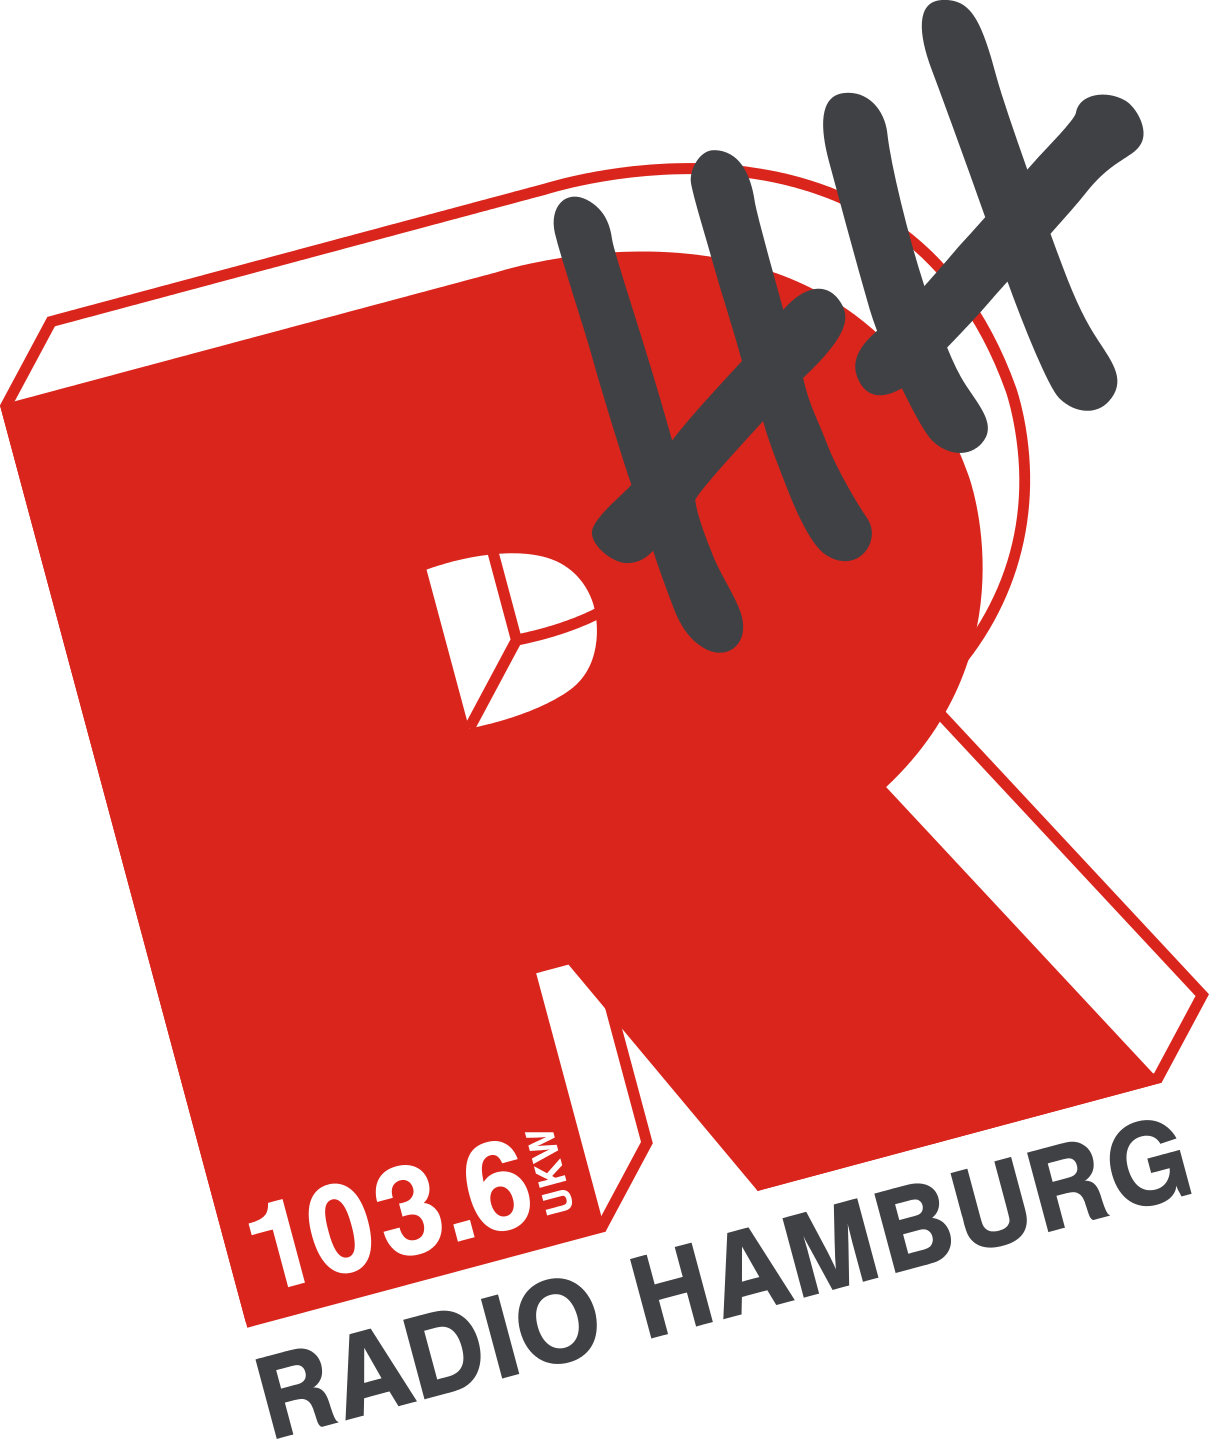 Download Datei:Radio Hamburg.svg - Wikipedia